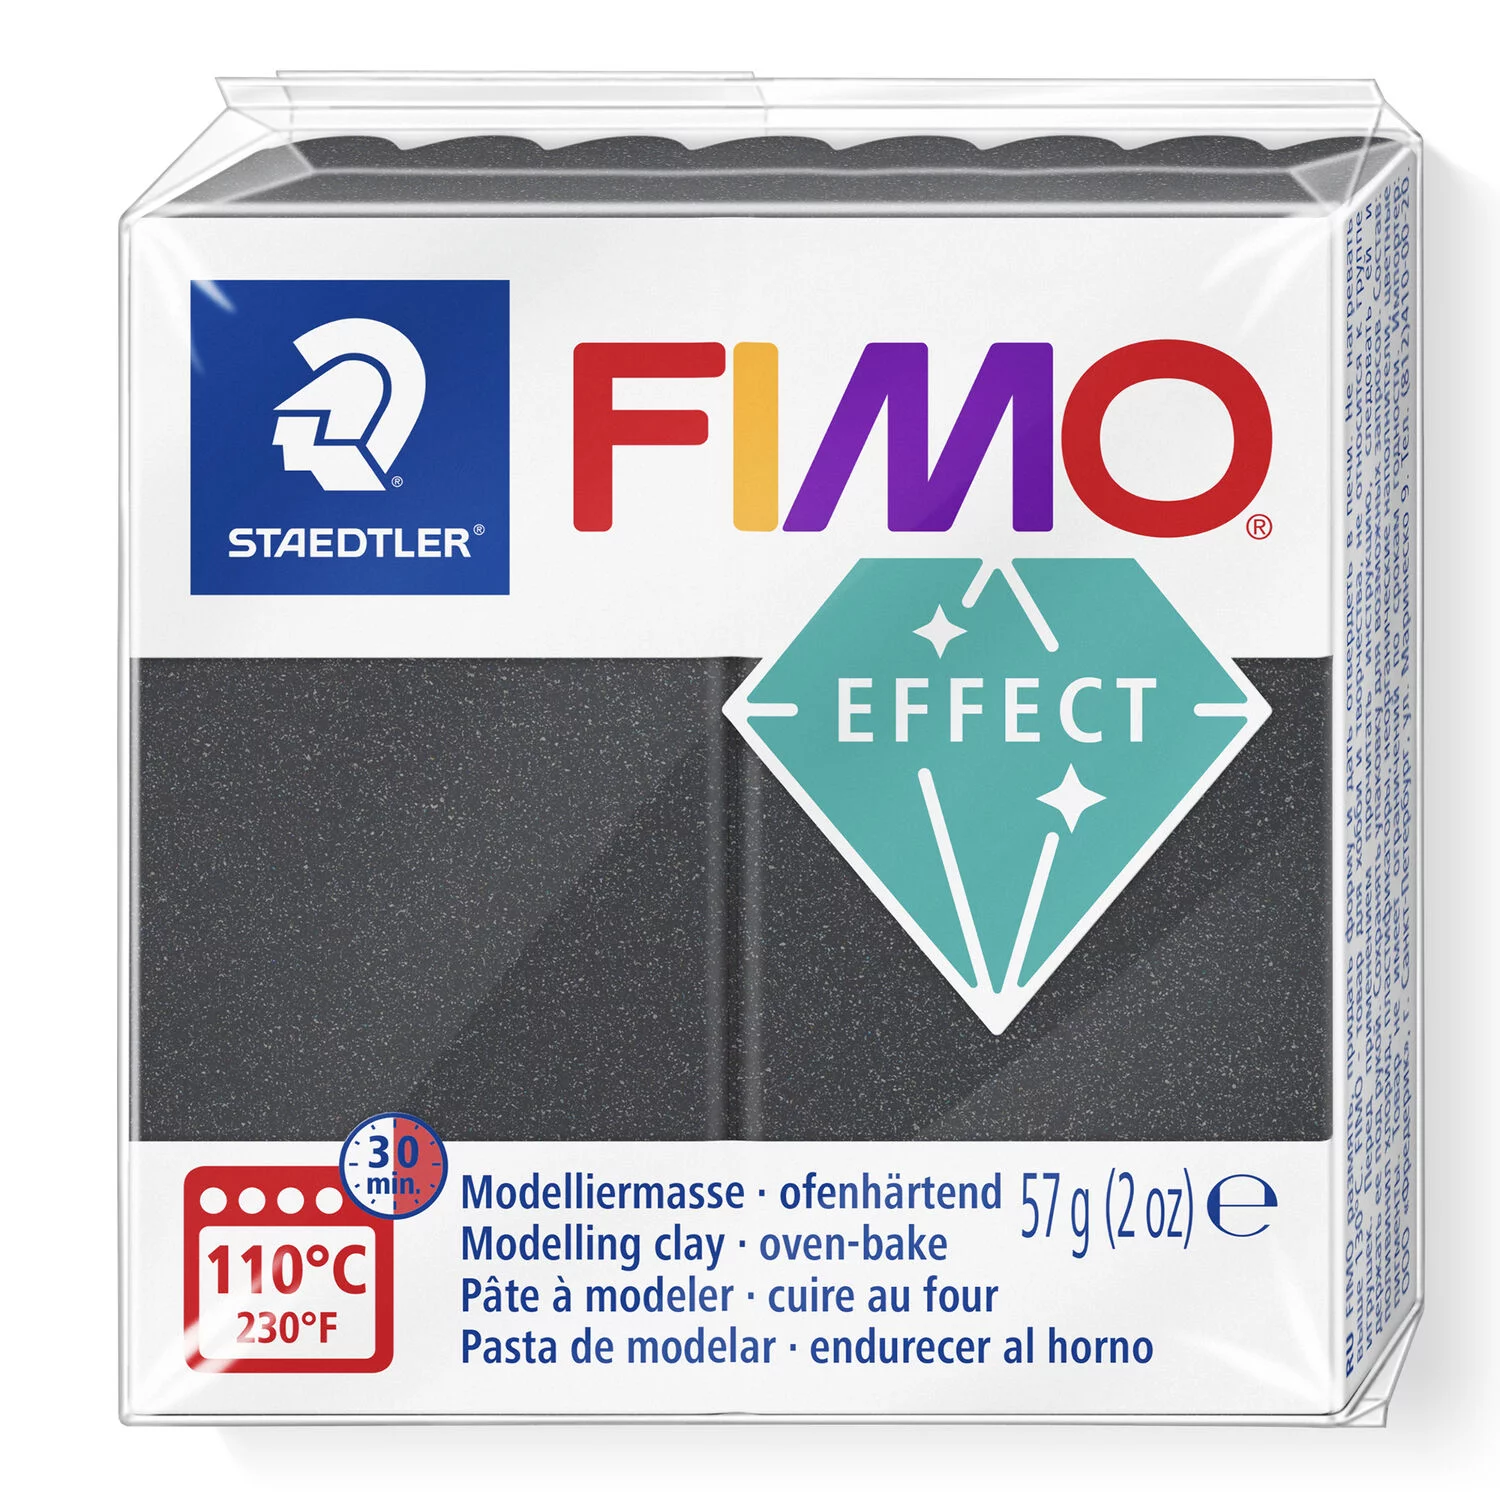 STAEDTLER 8010-91 - Fimo effect Metallic ofenhärtende Modelliermasse, 57g, stahlgrau metallic